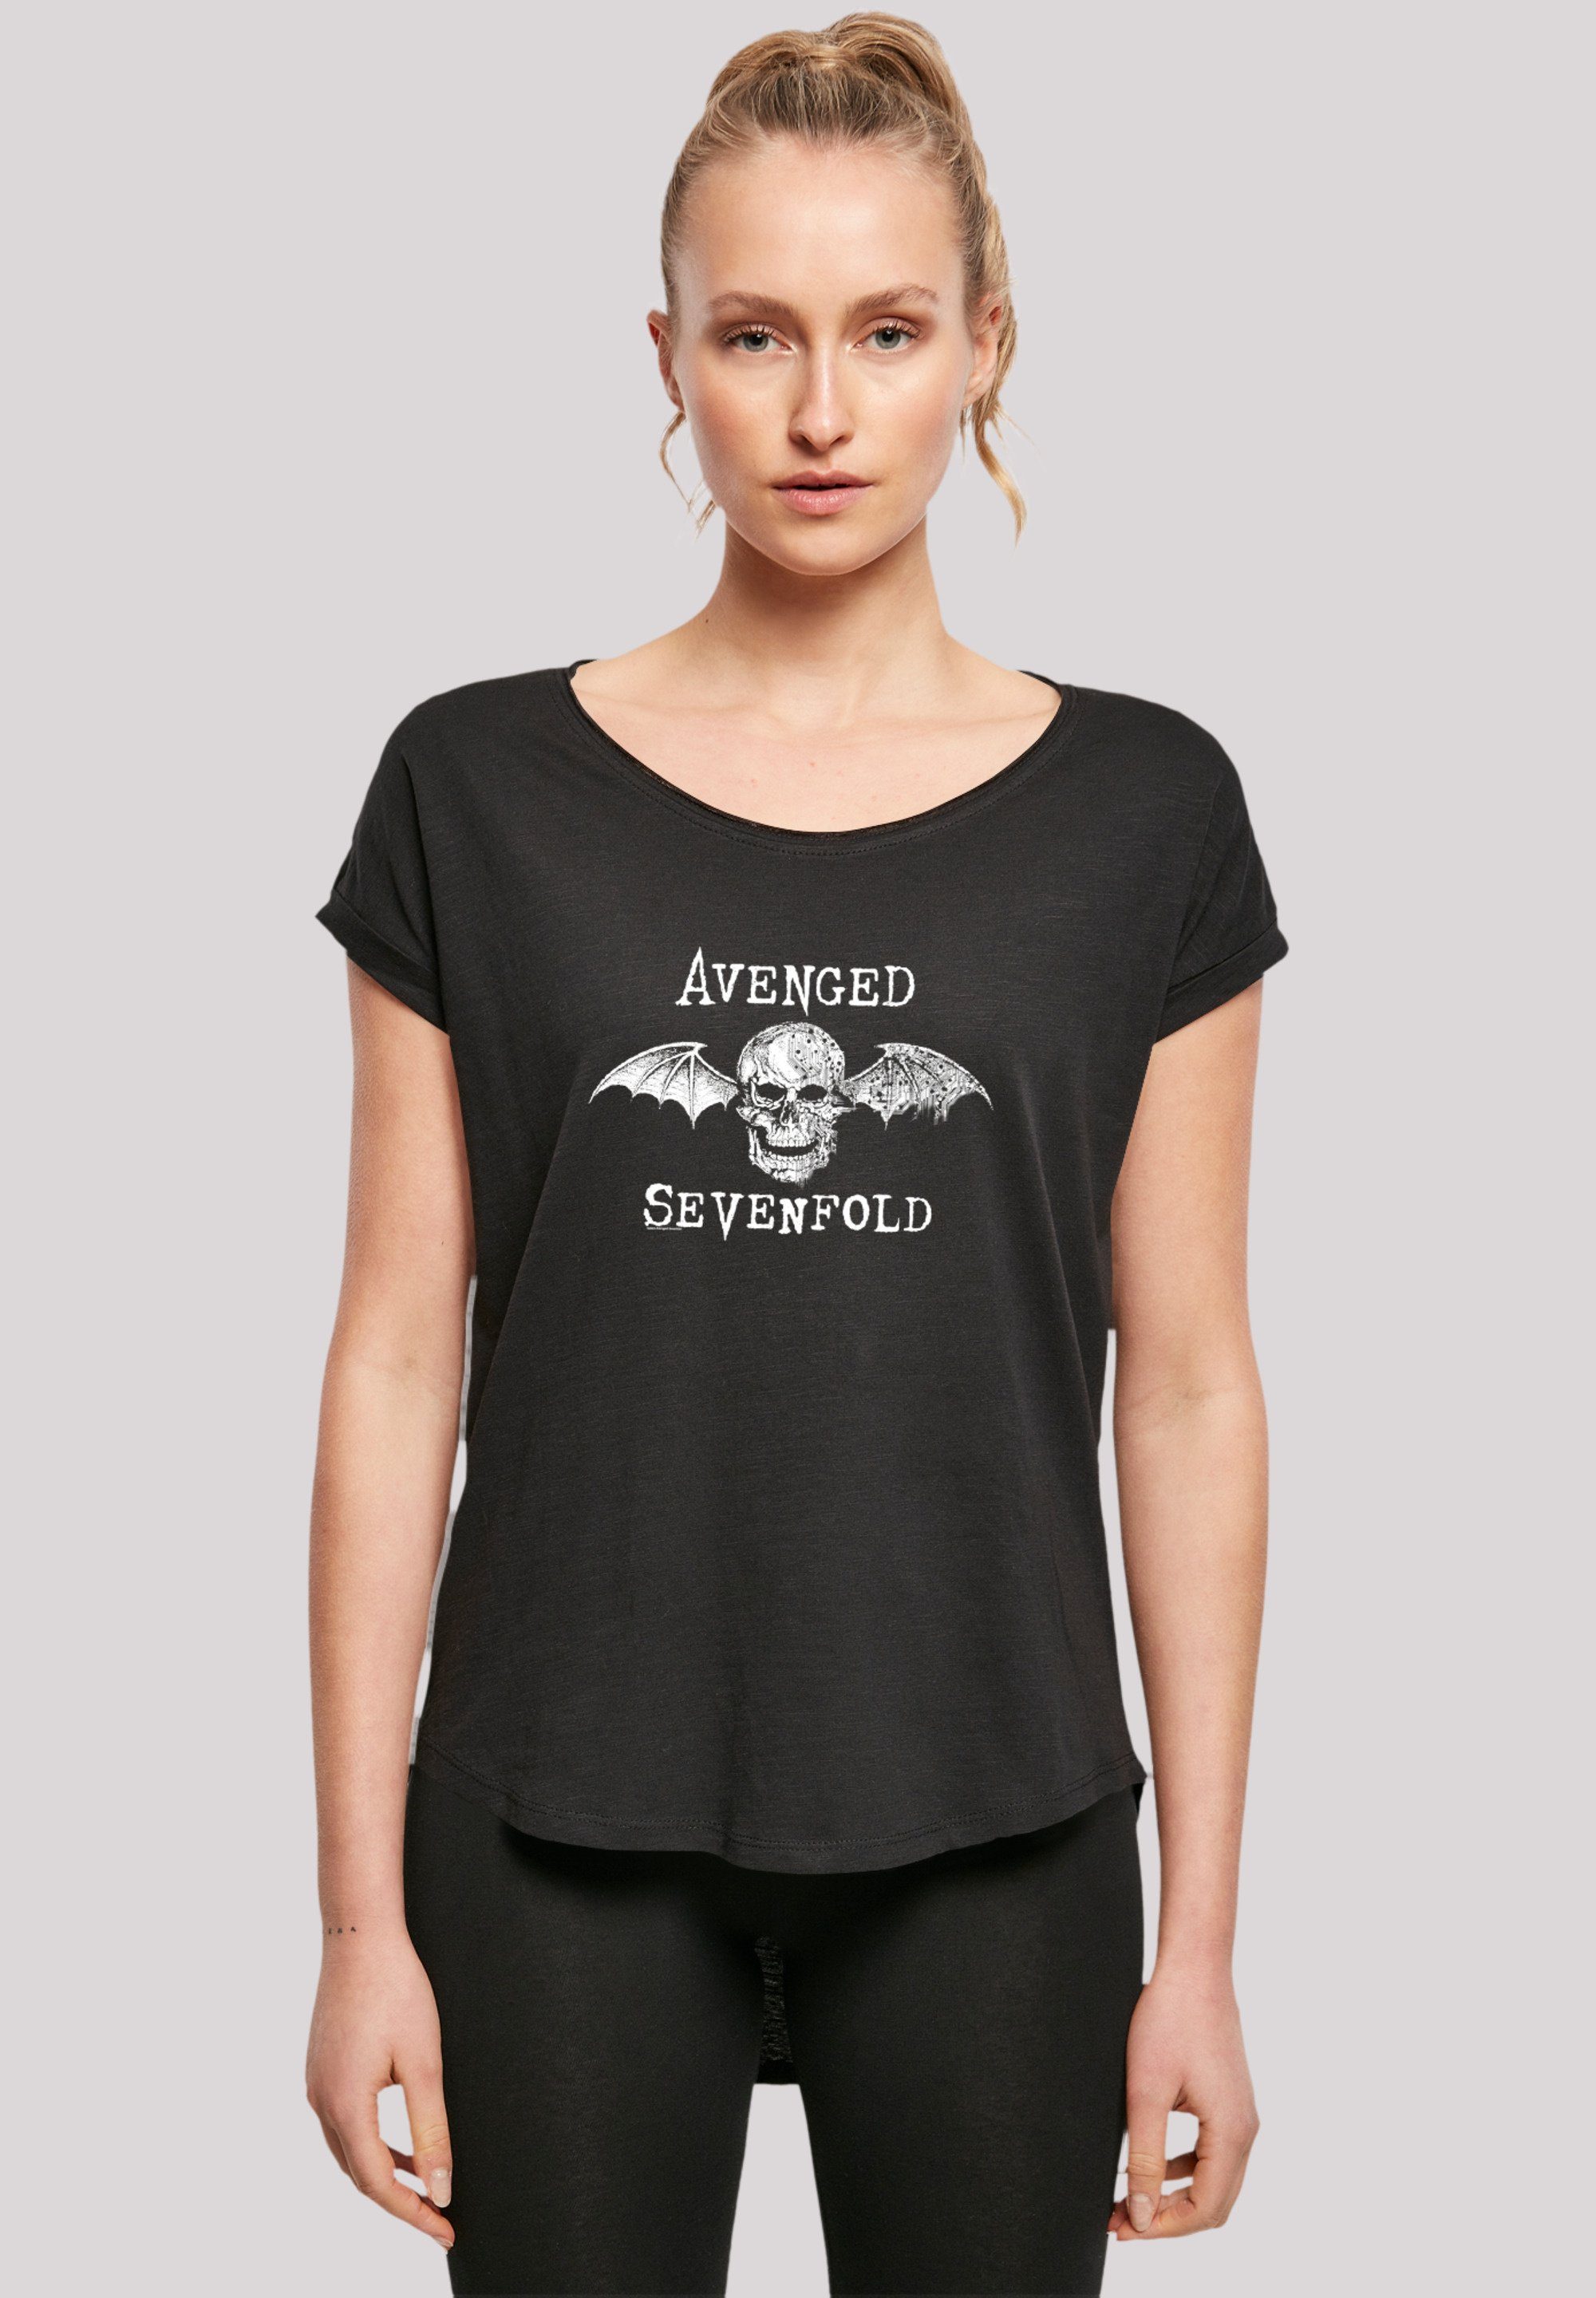 F4NT4STIC T-Shirt Avenged Sevenfold Rock Metal Band Cyborg Bat Premium Qualität, Band, Rock-Musik